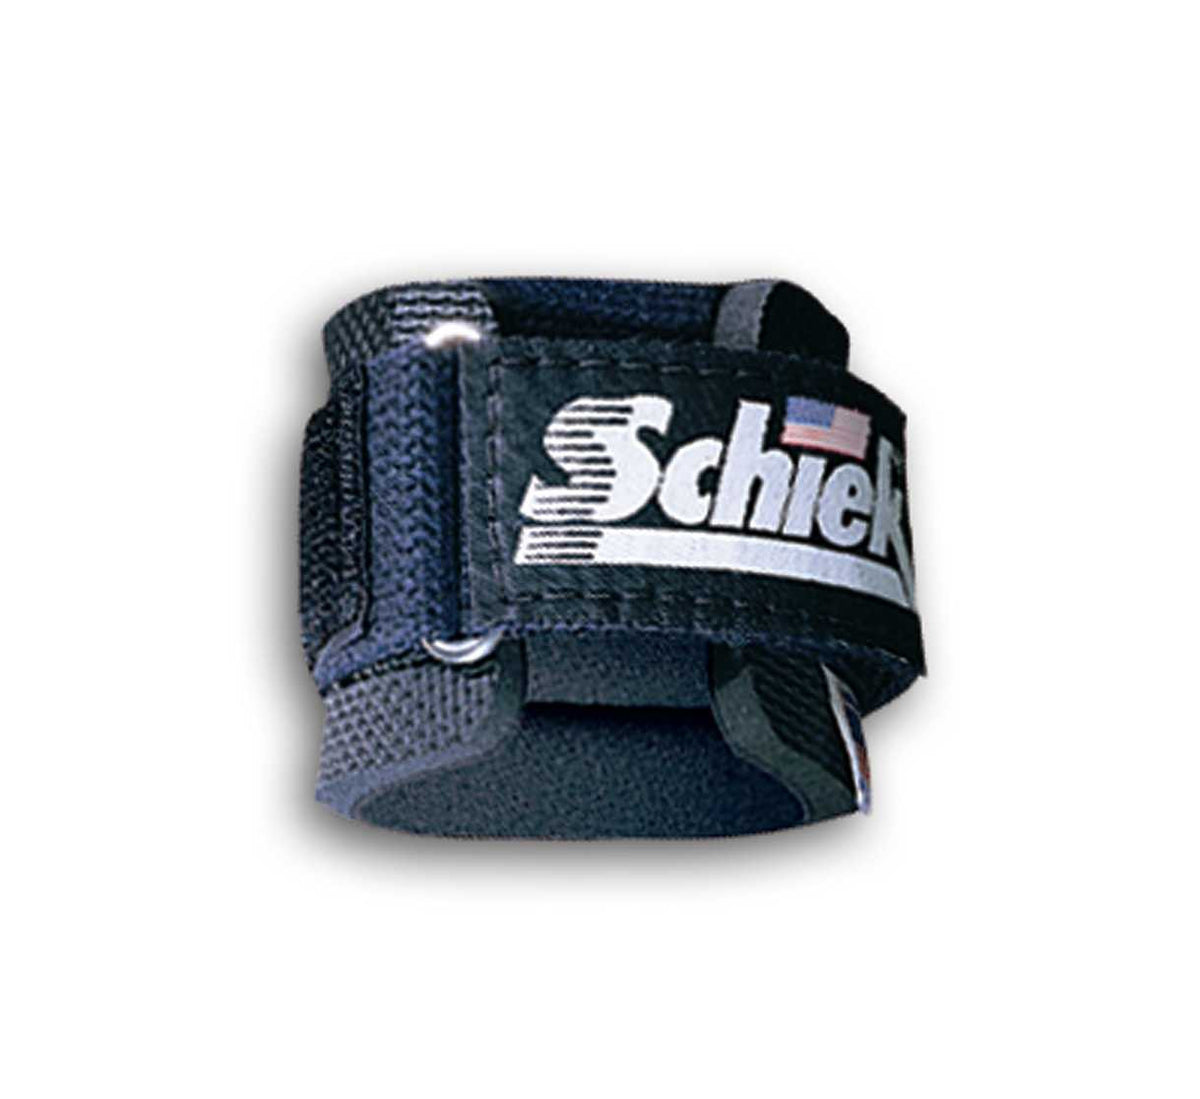 S1100WS Wrist Supports -Schiek